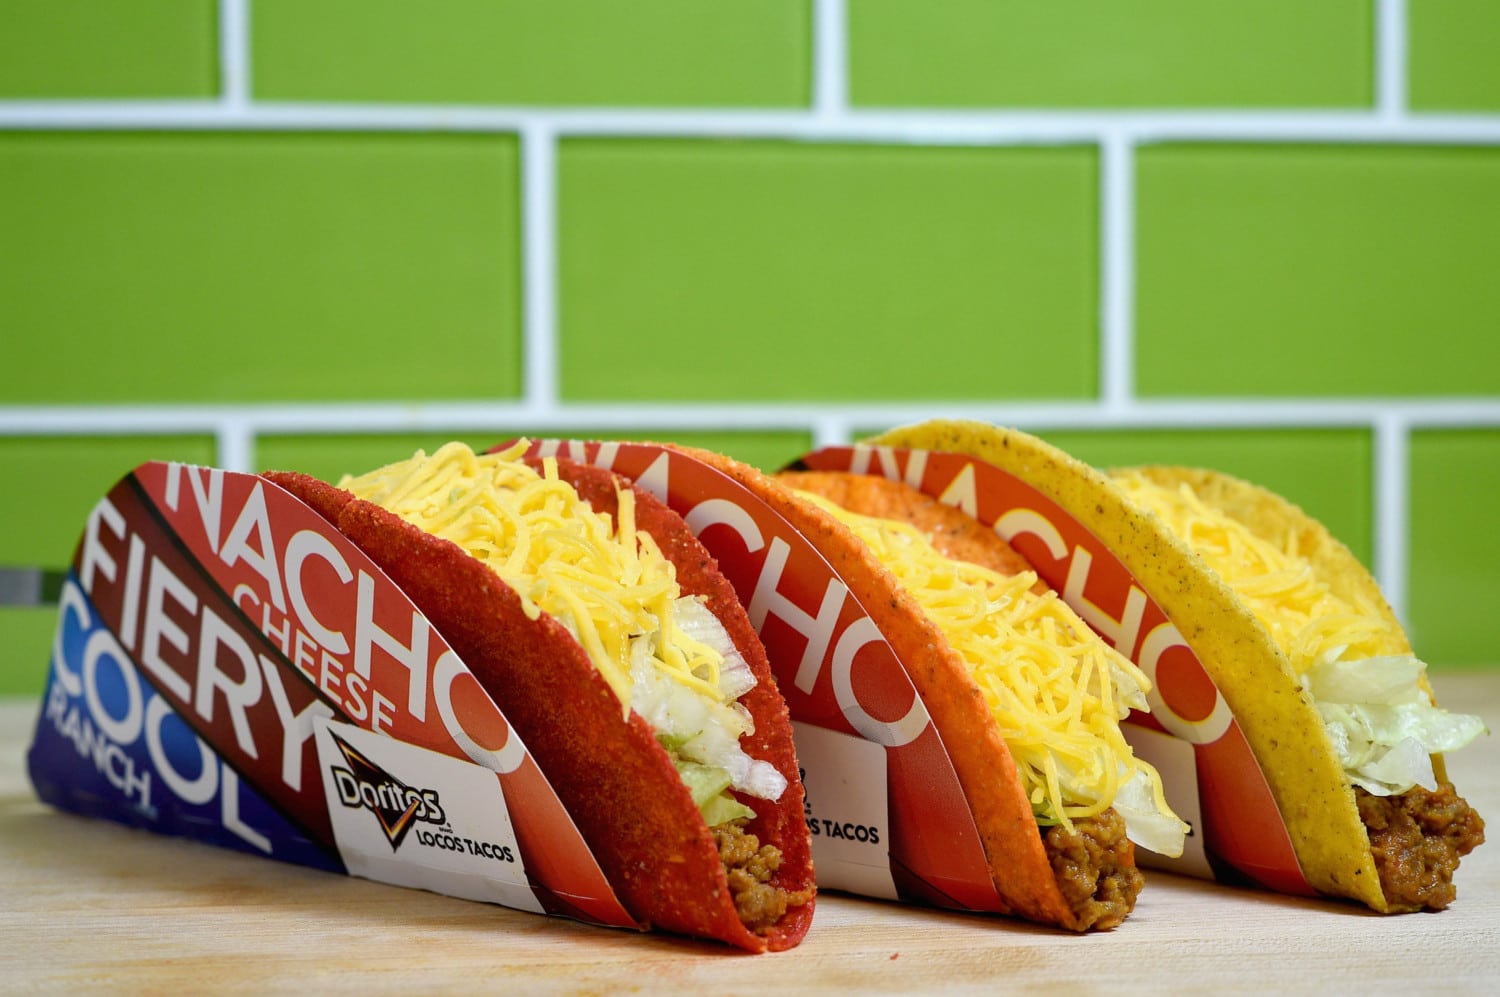 Taco Bell Menu Items, Headquarters And Restaurant Shoot